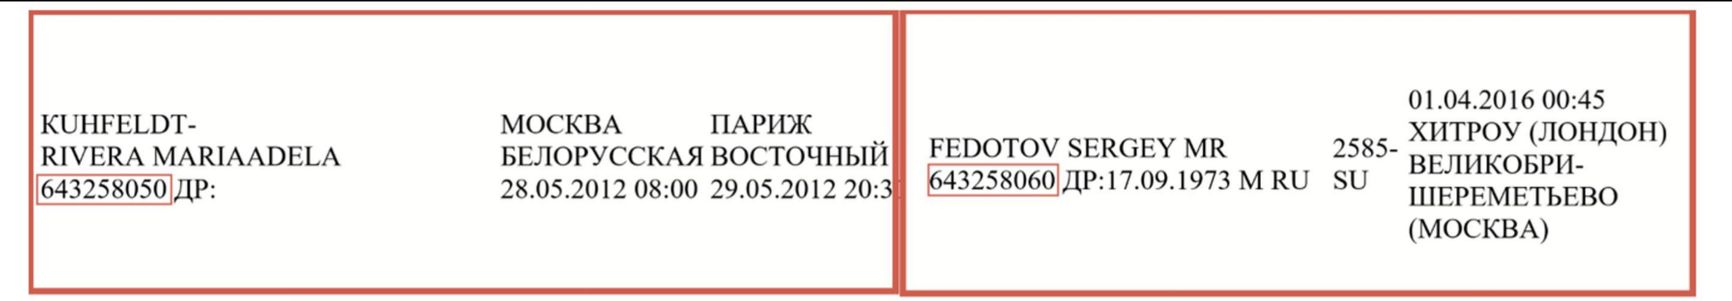 A comparison of Maria Adela Rivera Kuhfeldt’s (left) and Sergei Fedotov’s (right) passport details 